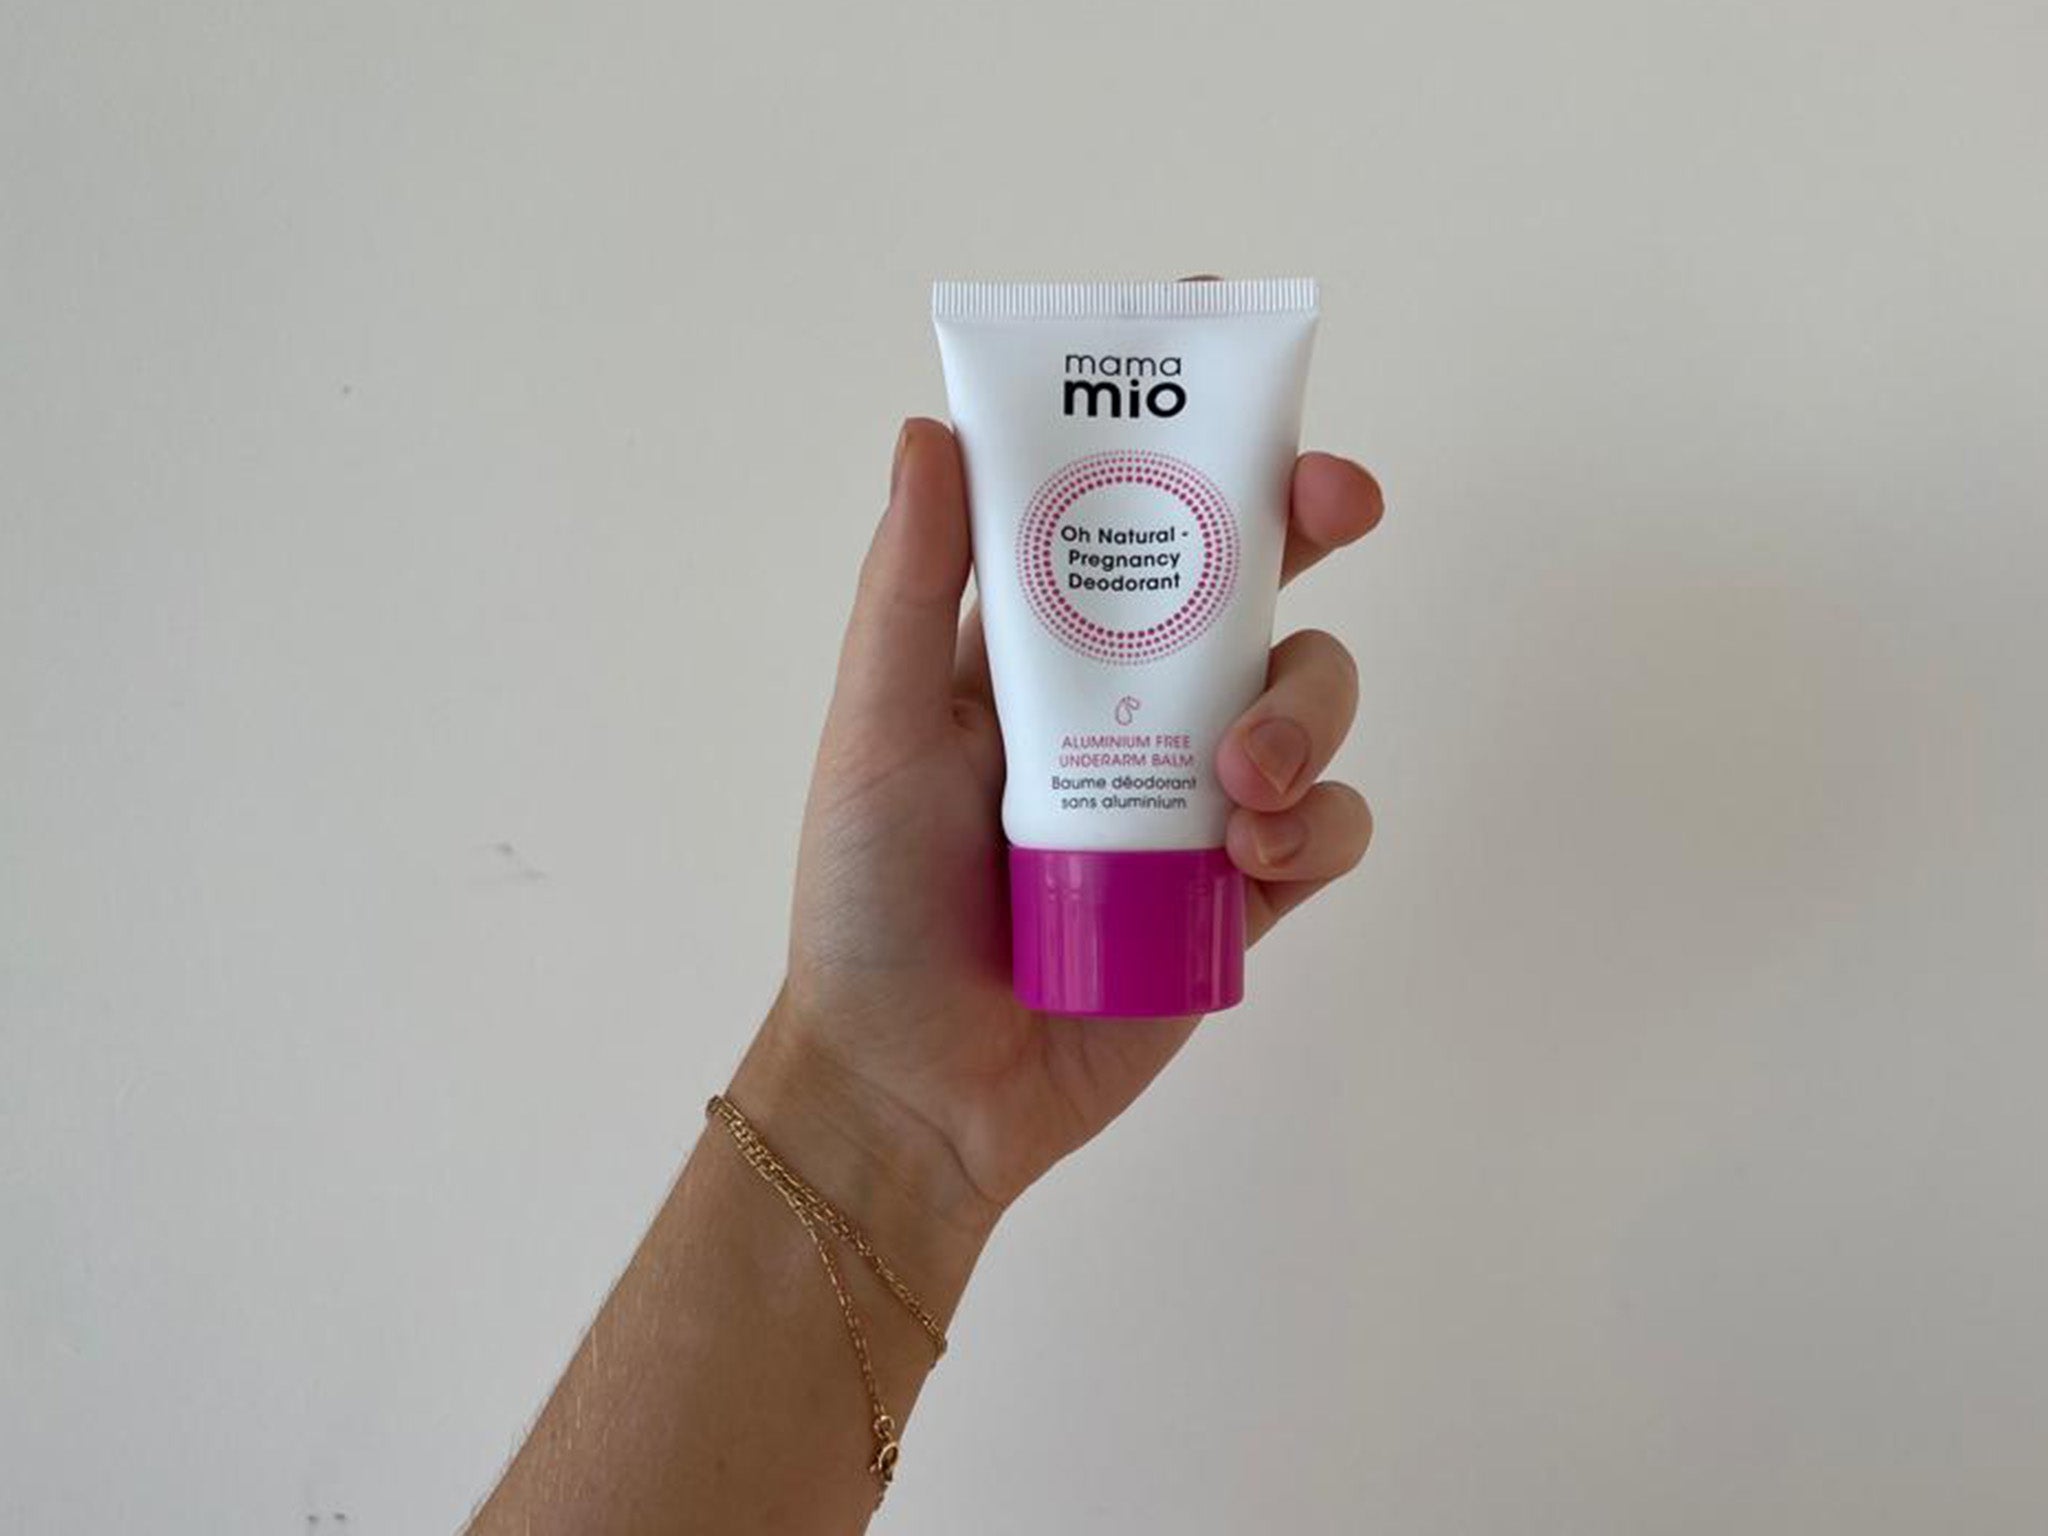 Mama Mio oh natural pregnancy deodorant